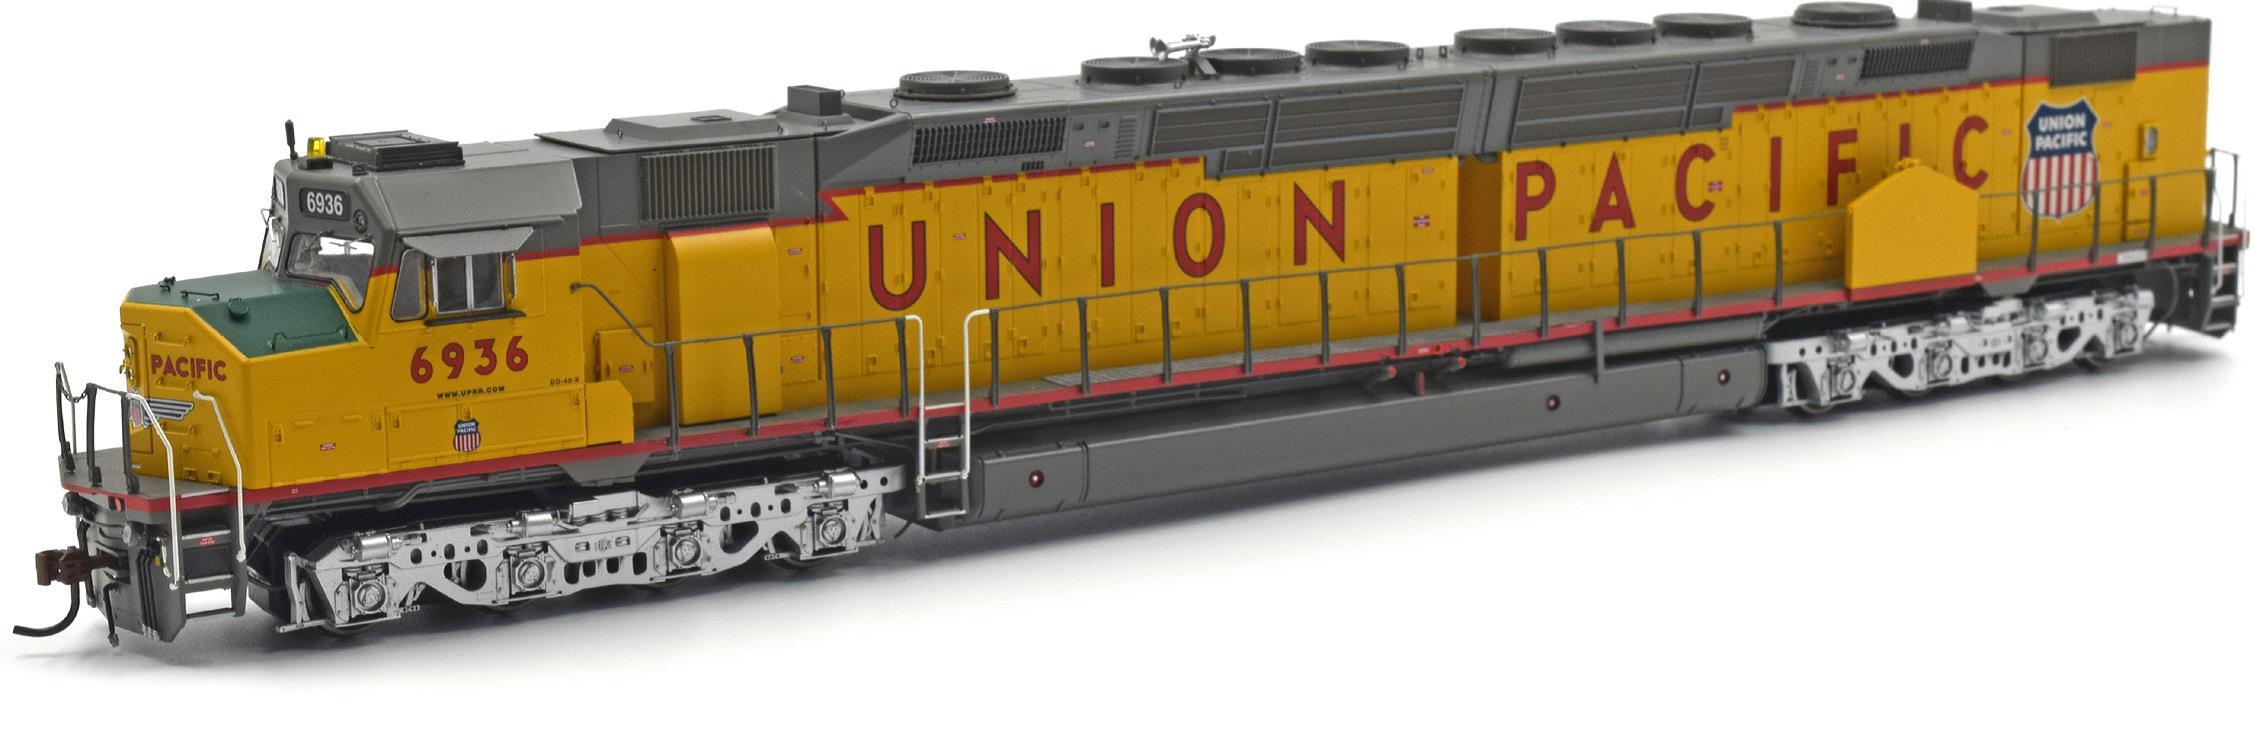 Union Pacific DDA40X Diesel Locomotive (2)